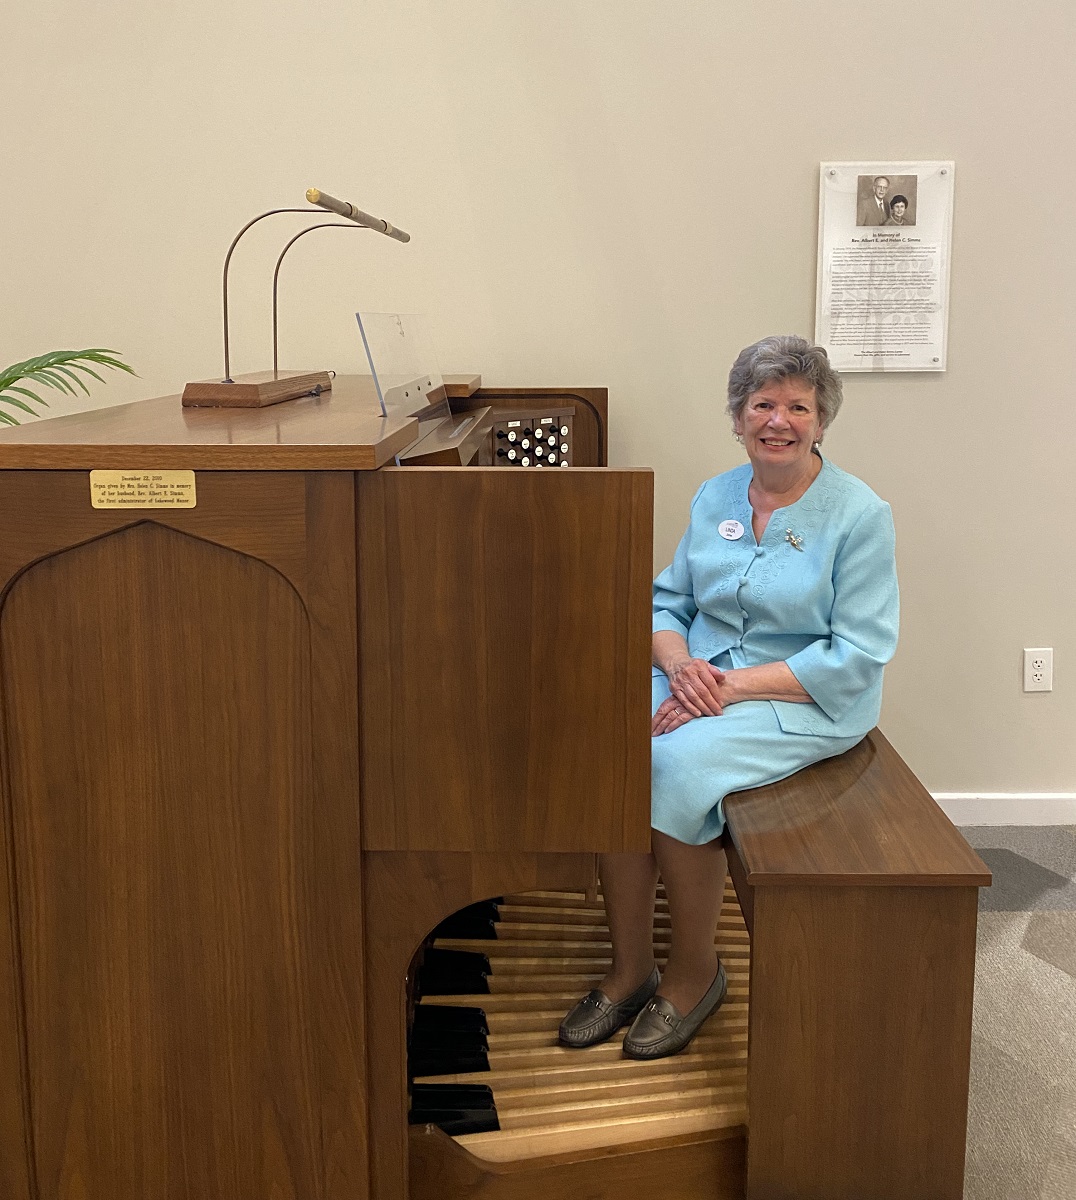 Spiritual Music Event with Senior Woman sitting at the Organ